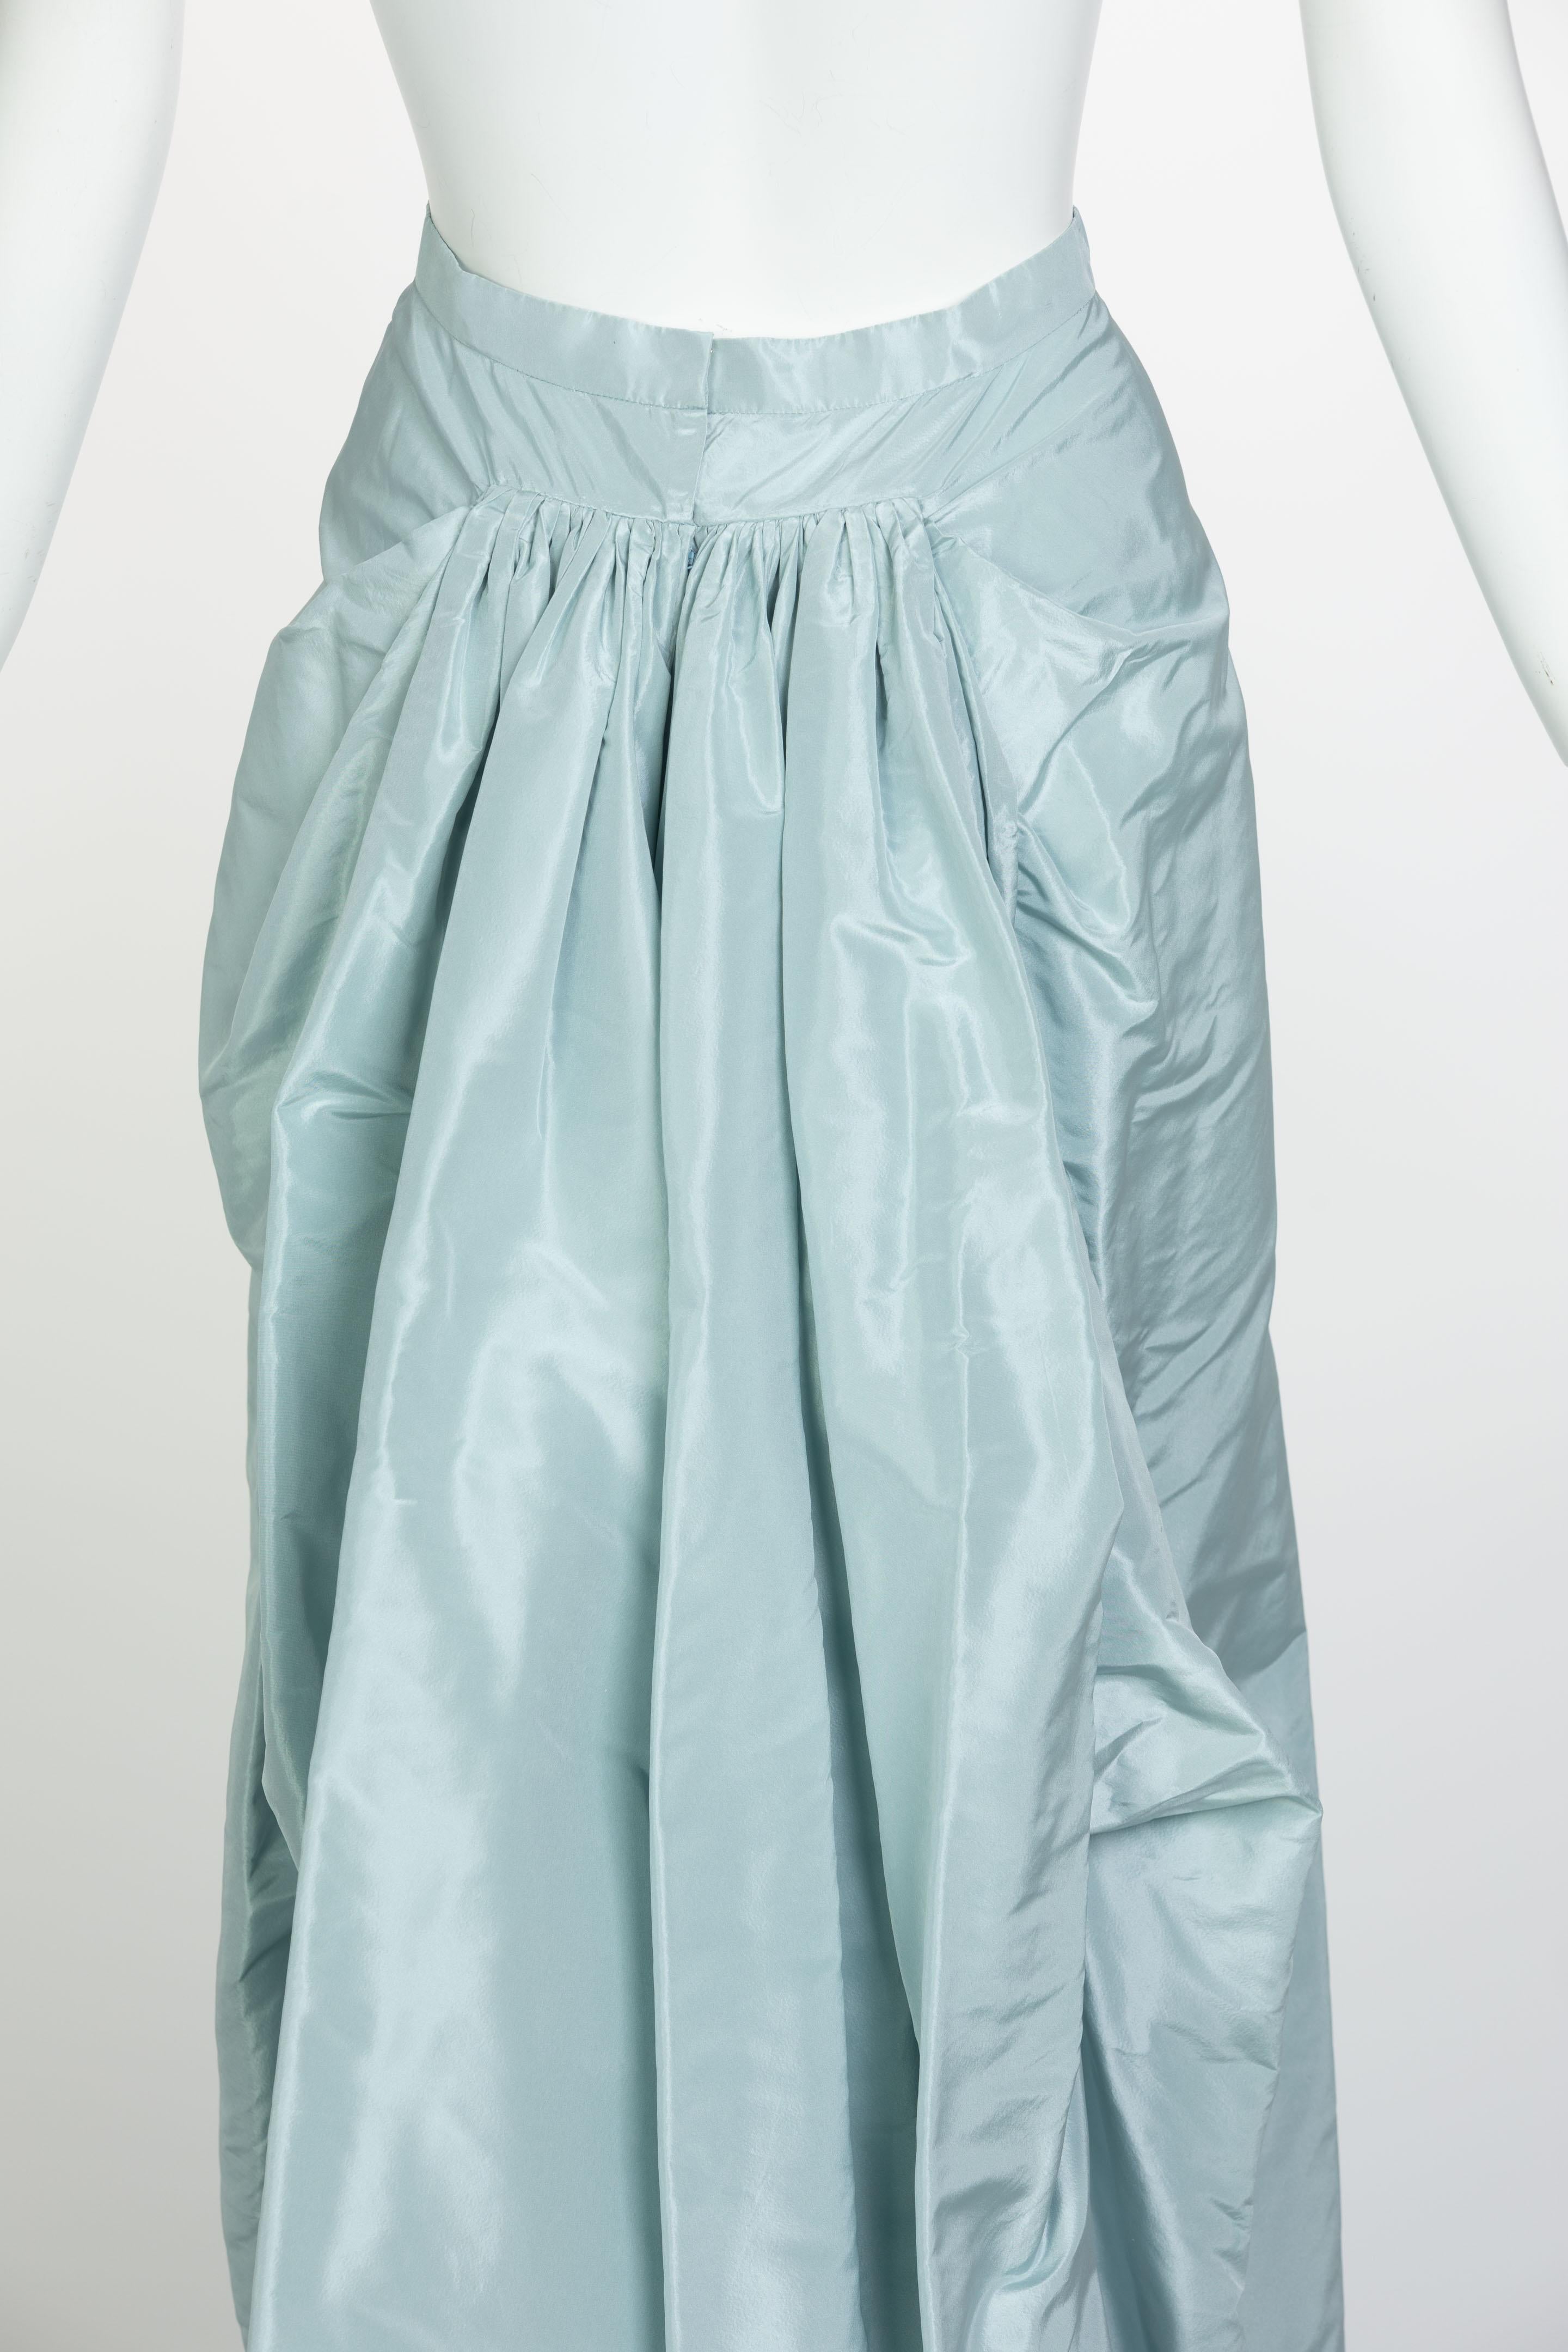 Vintage Oscar de la Renta  Baby Blue Silk Taffeta Gown Ensemble 3